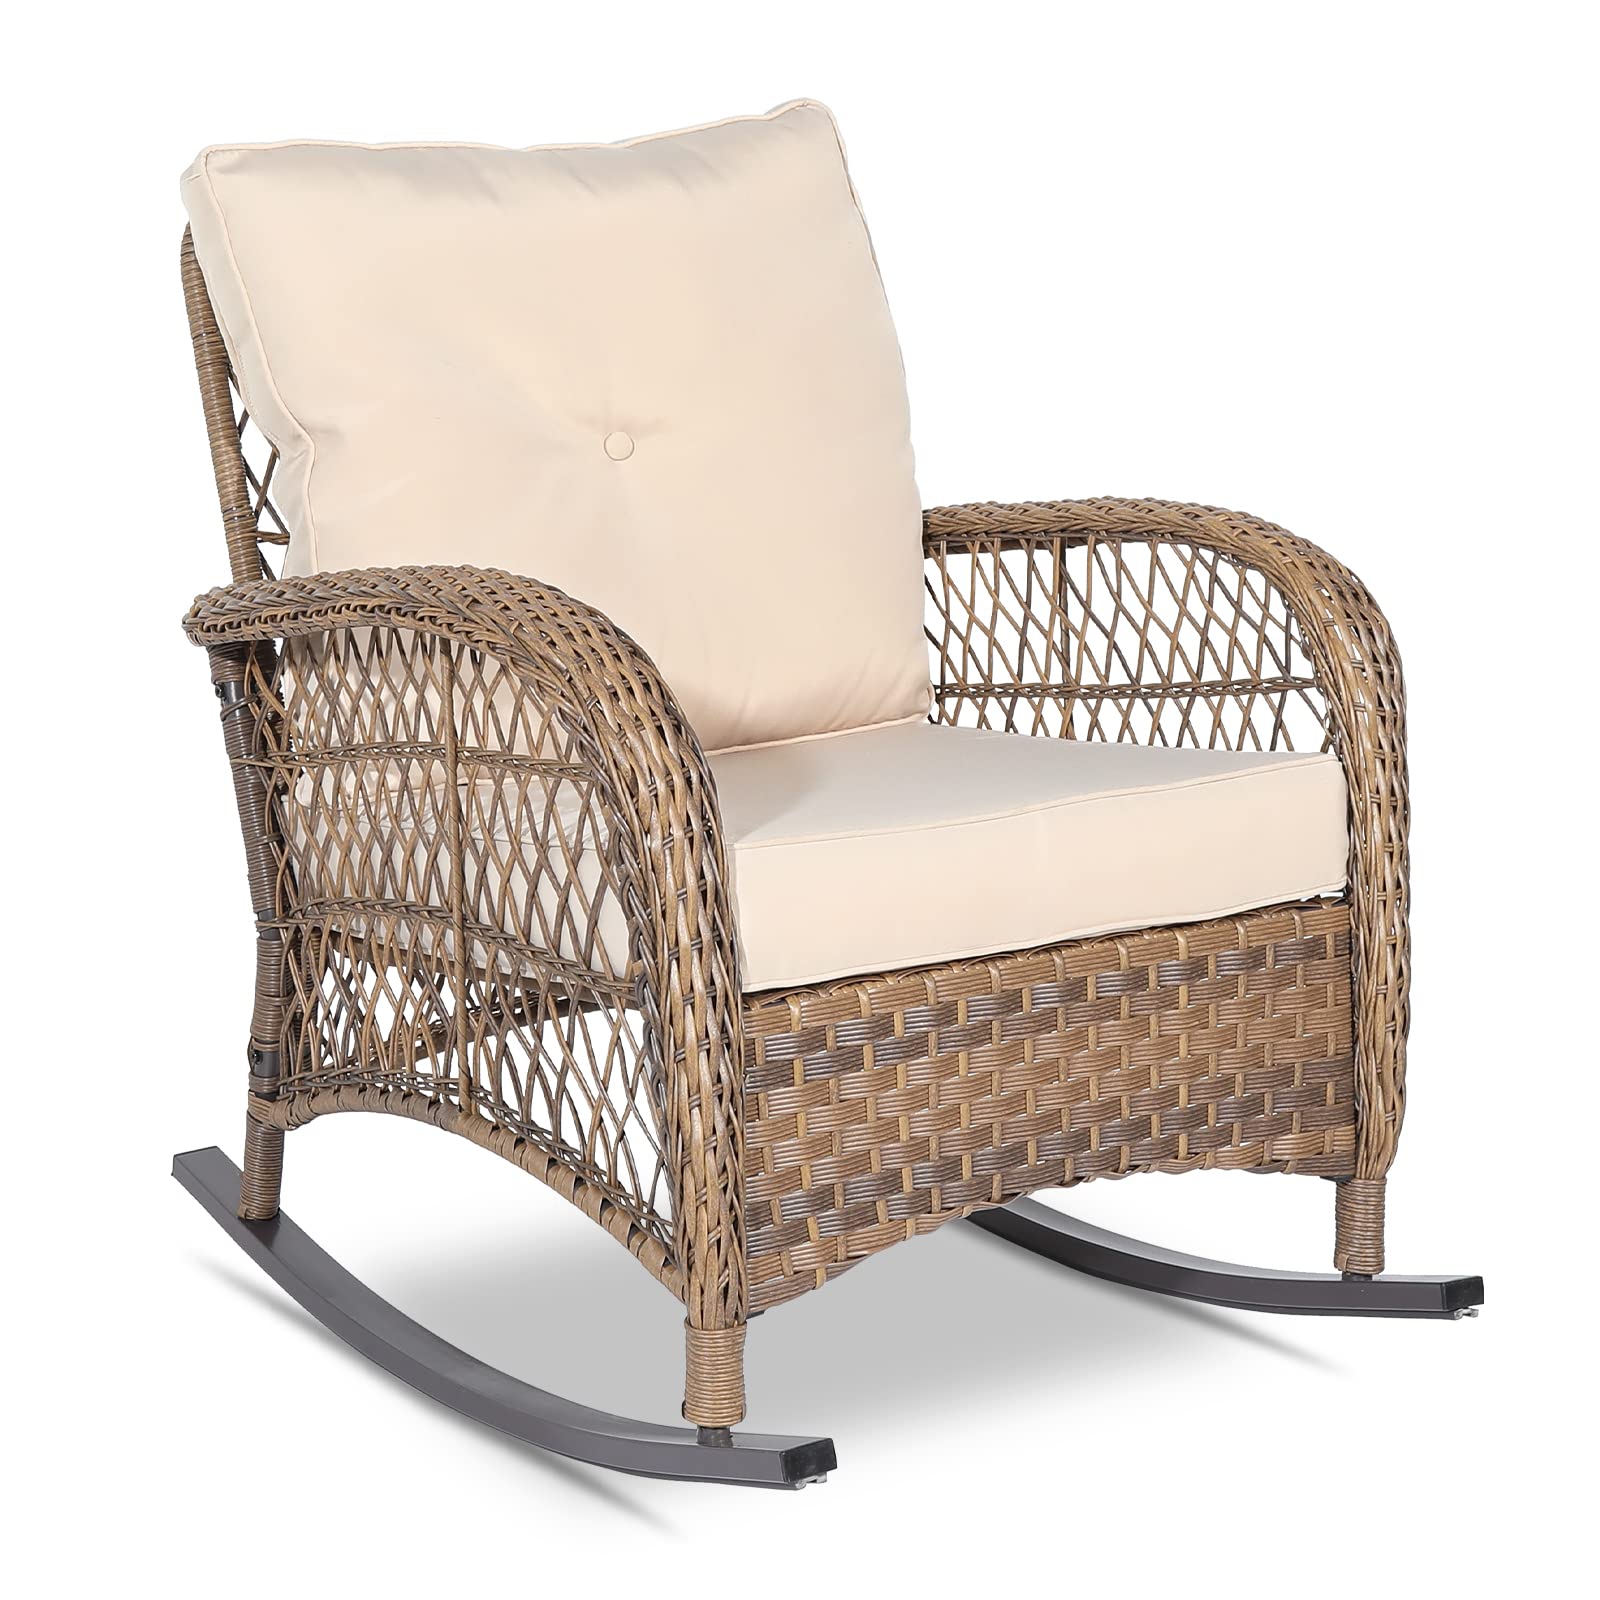 VIVIJASON Outdoor Wicker Rocking Chair, Patio Rattan Rocker Chair with Cushions & Steel Frame, All-Weather Rocking Lawn Wicker Furniture for Garden Backyard Porch (Beige)